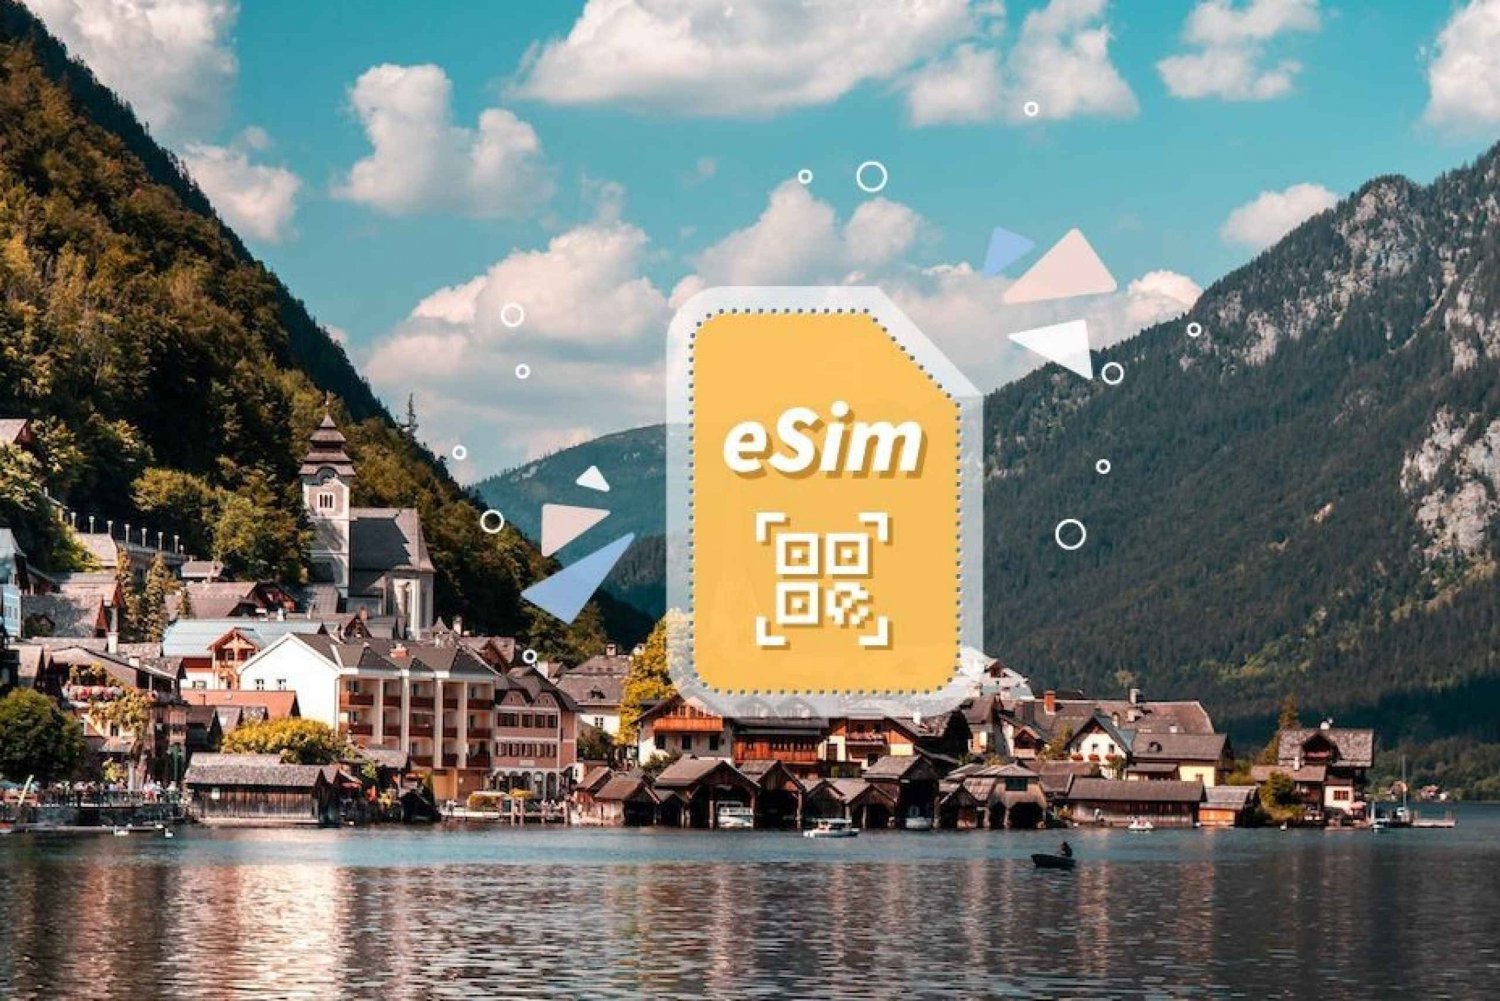 Østerrike/Europa: 5G eSim Mobile Data Plan